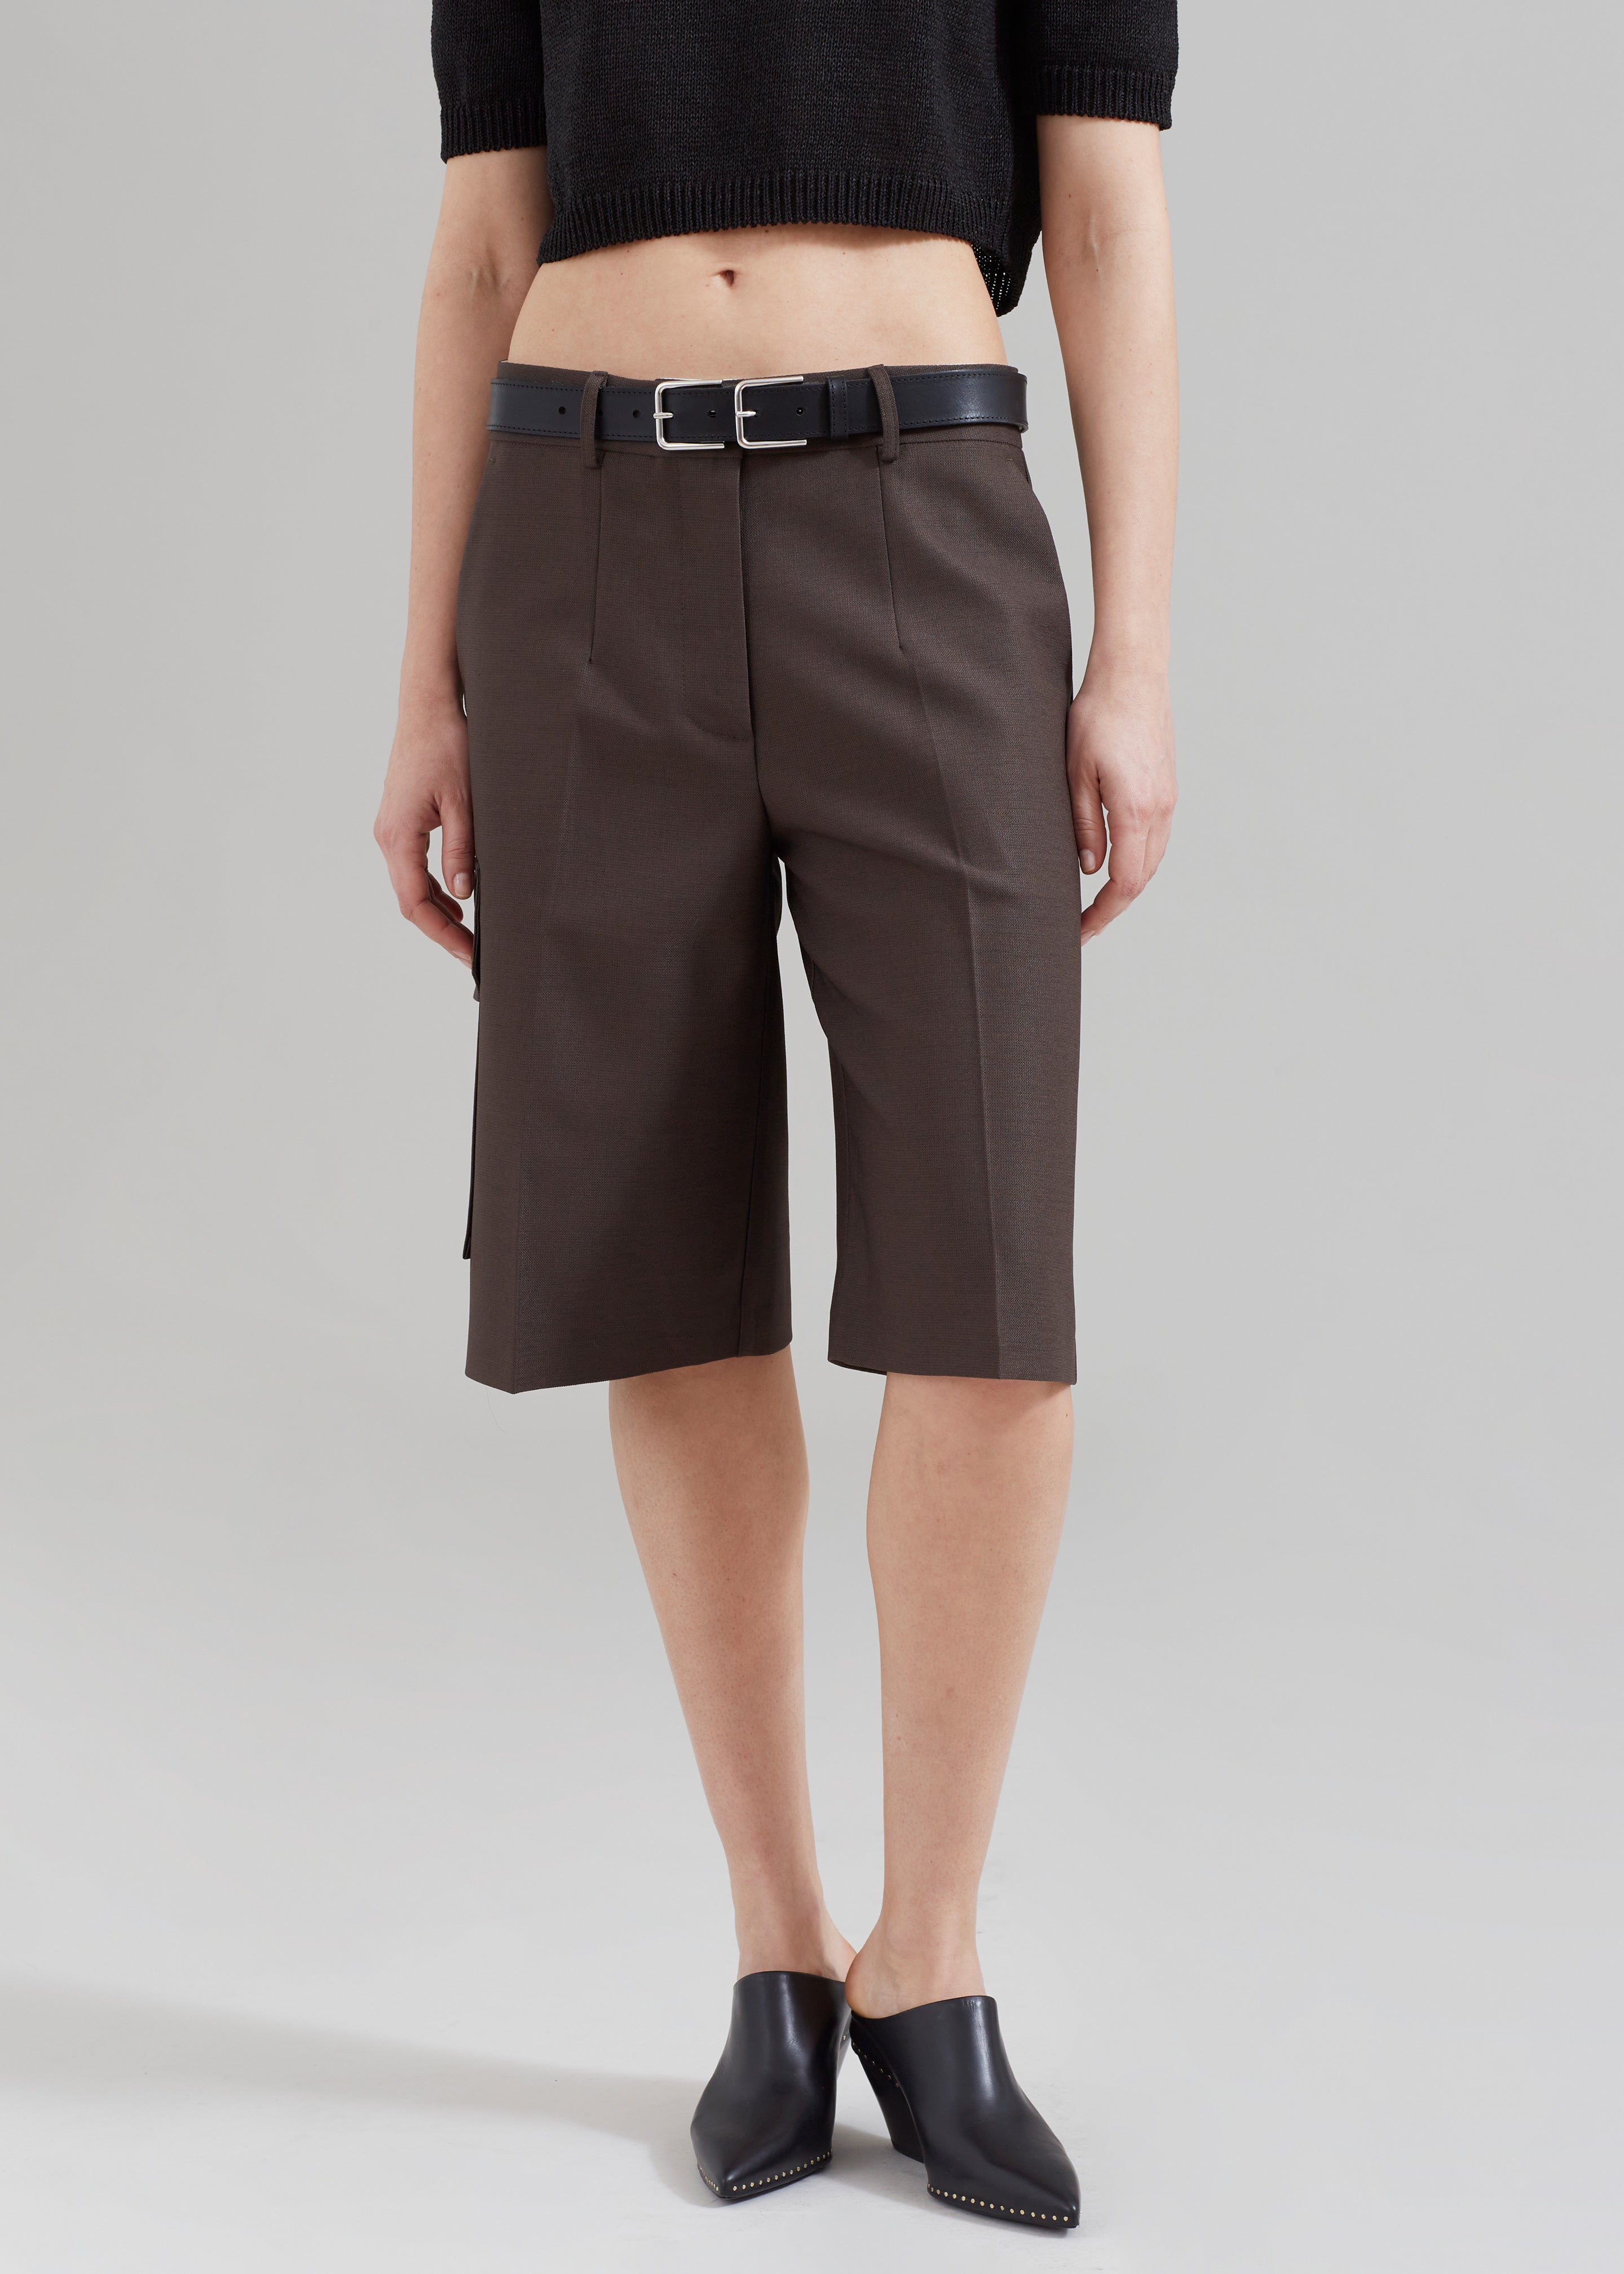 Revel Cargo Shorts - Brown - 8